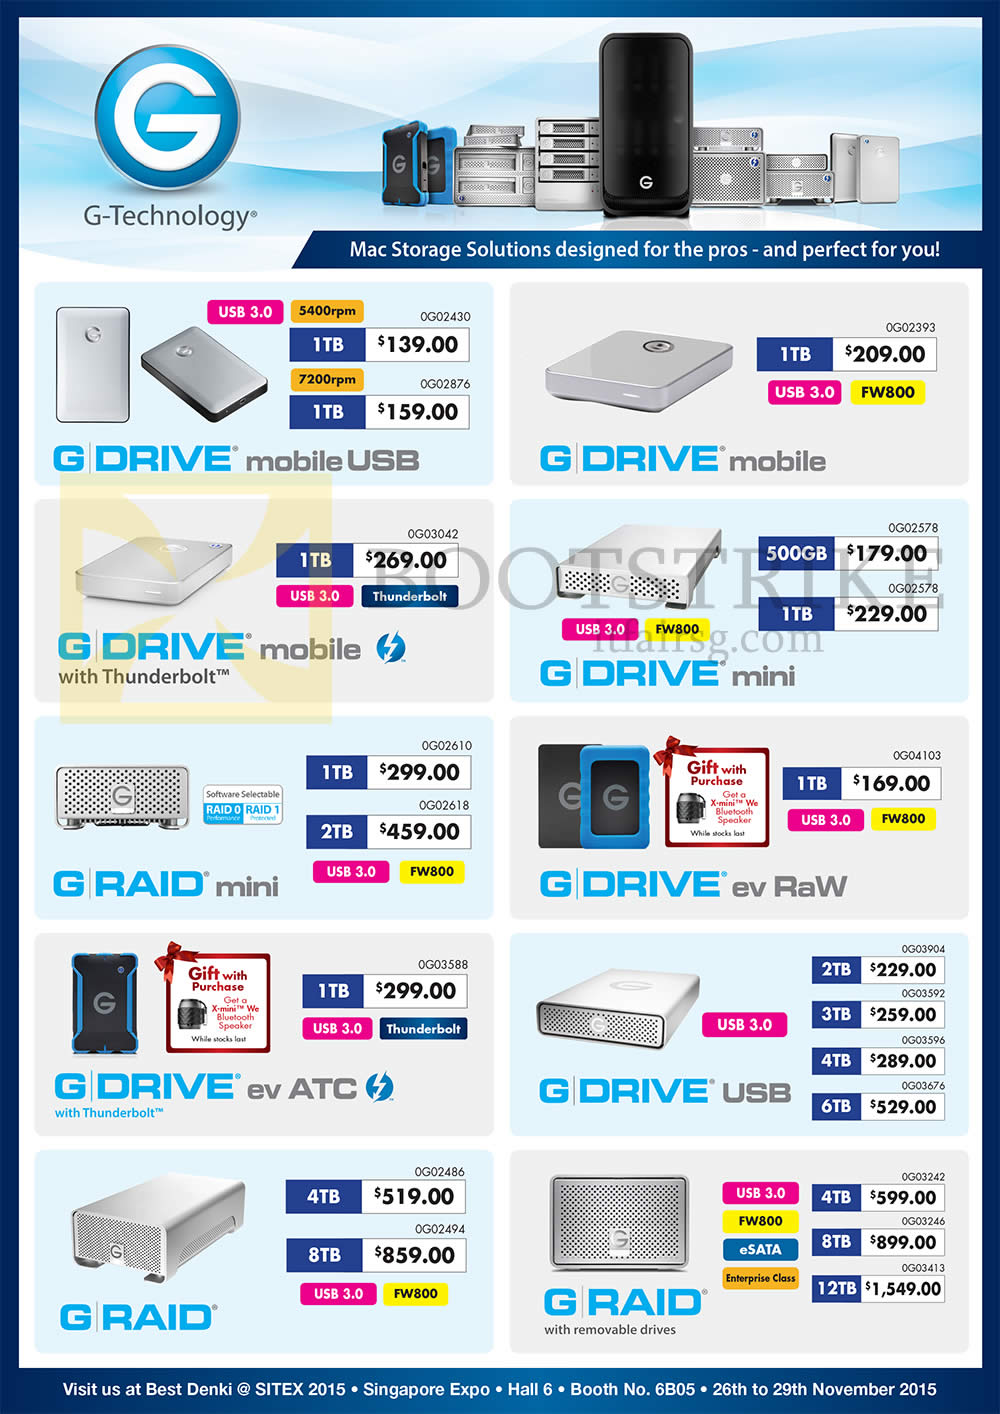 SITEX 2015 price list image brochure of G-Technology Storage Solutions G Drive Mobile USB, Mobile, Mobile With Thunderbolt, Mini, Ev Raw, Ev ATC, USB, G Raid, Raid Mini